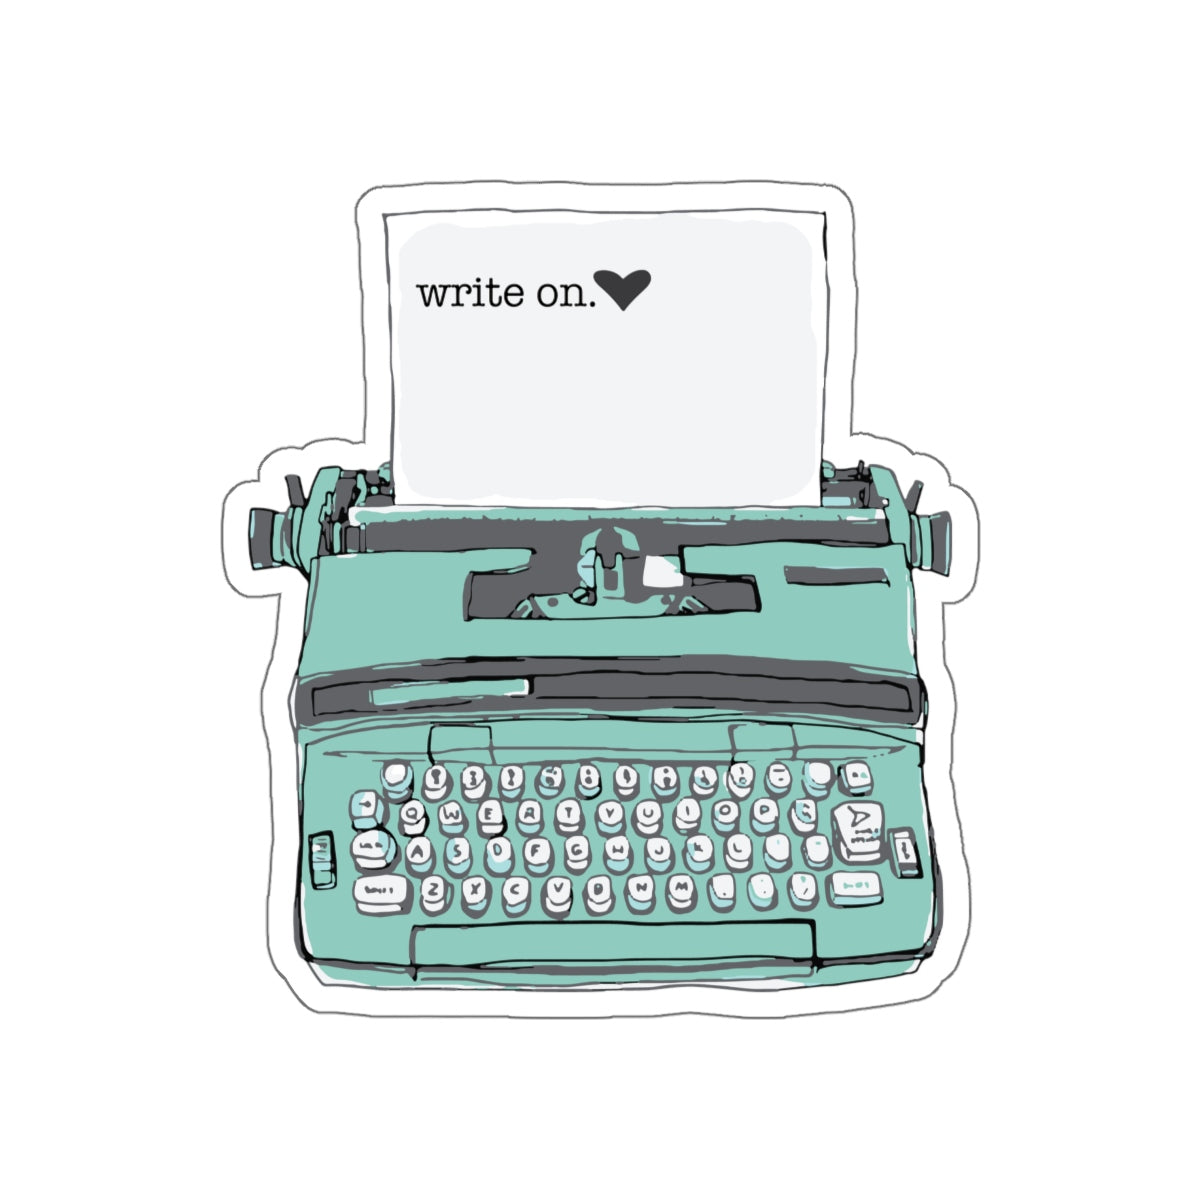 Typewriter Text using Transfer Paper — Stitchbook Studio